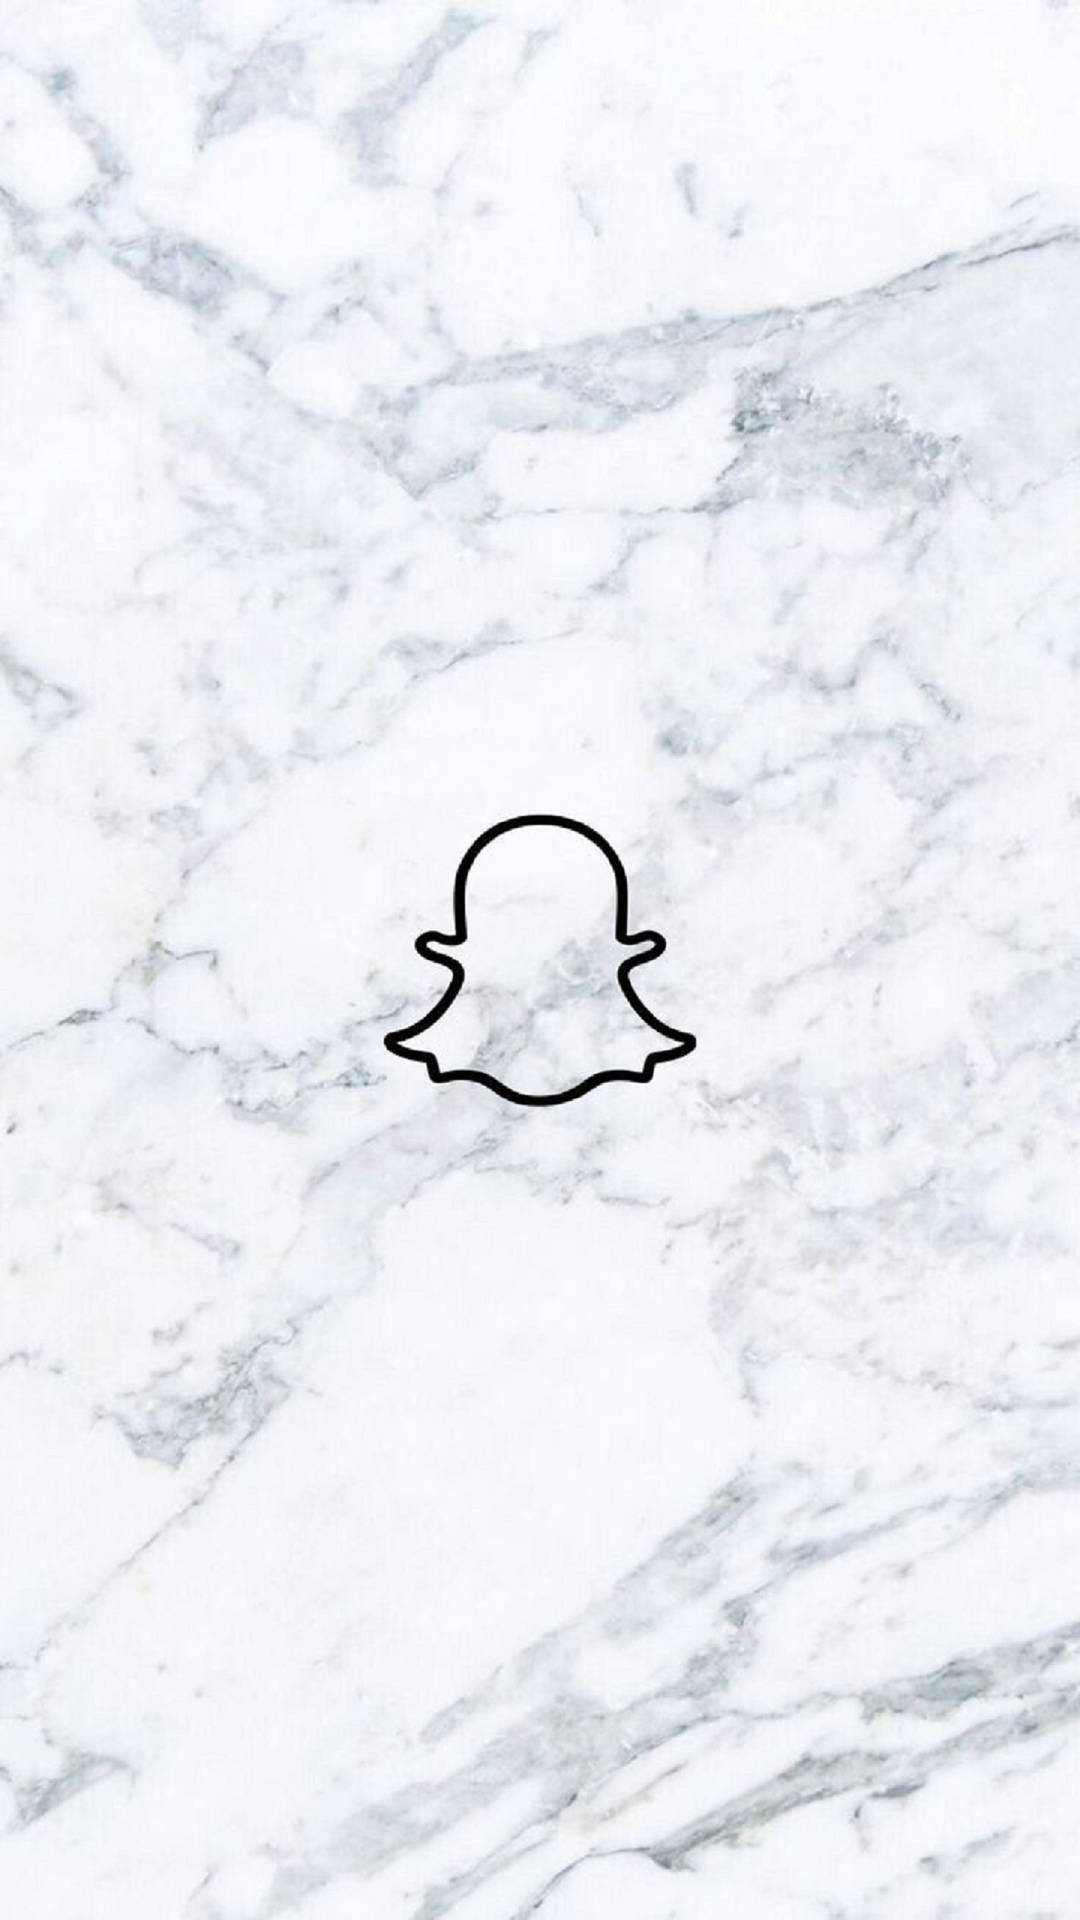 Marble Snapchat wallpaper - Marble